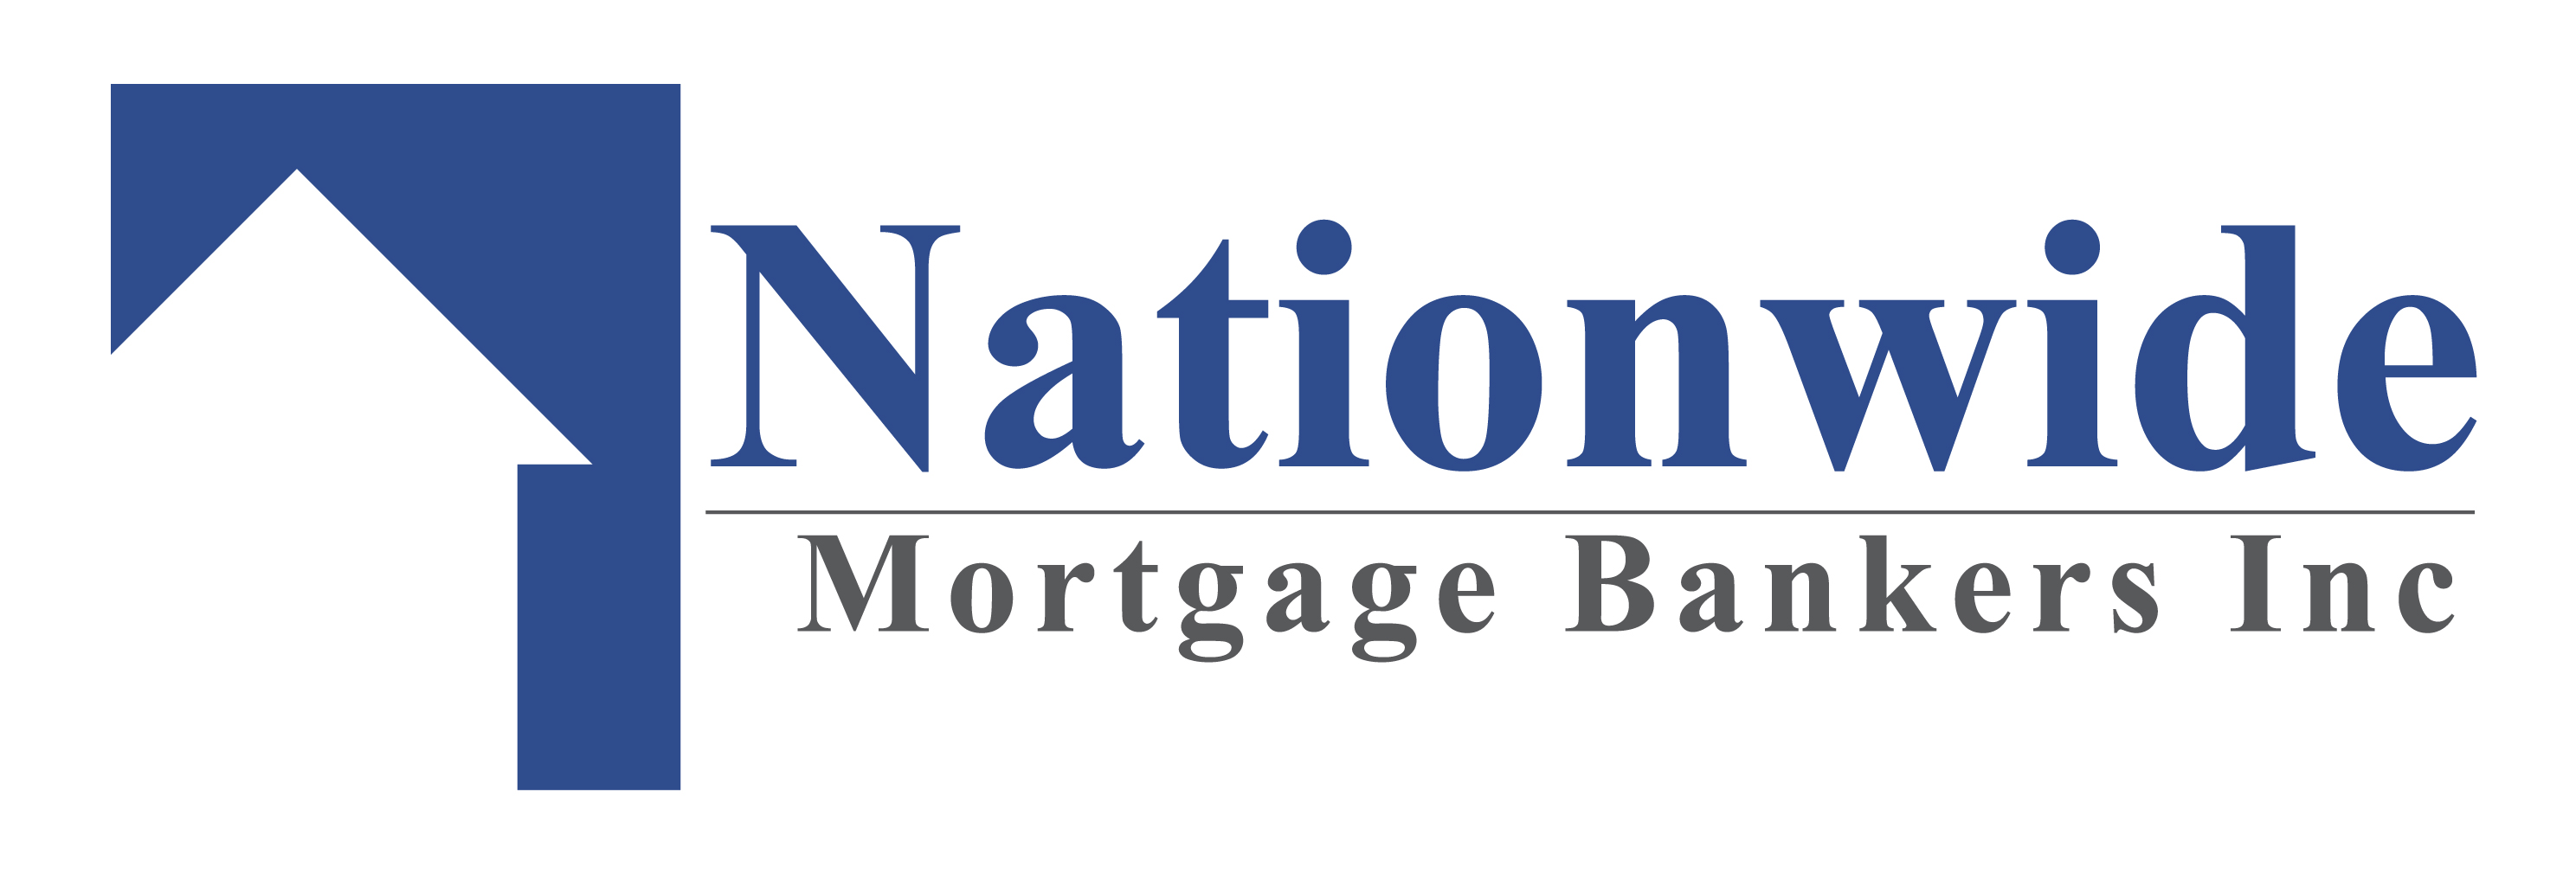 Nationwide Mortgage Bankers, Inc. Company Logo